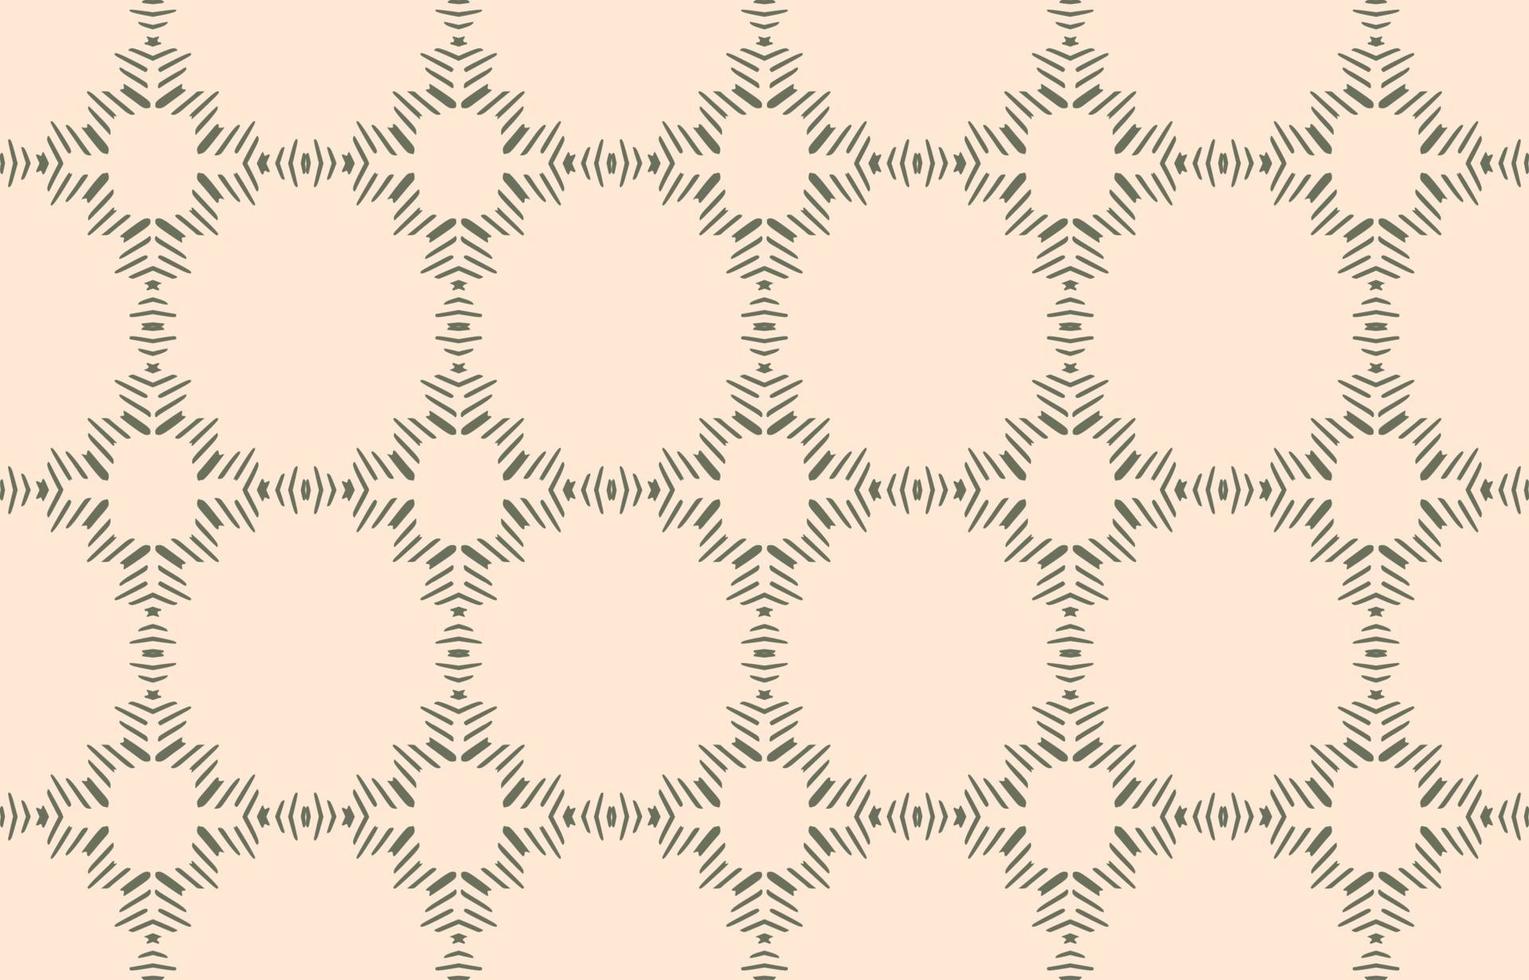 Islamic geometric pattern vector